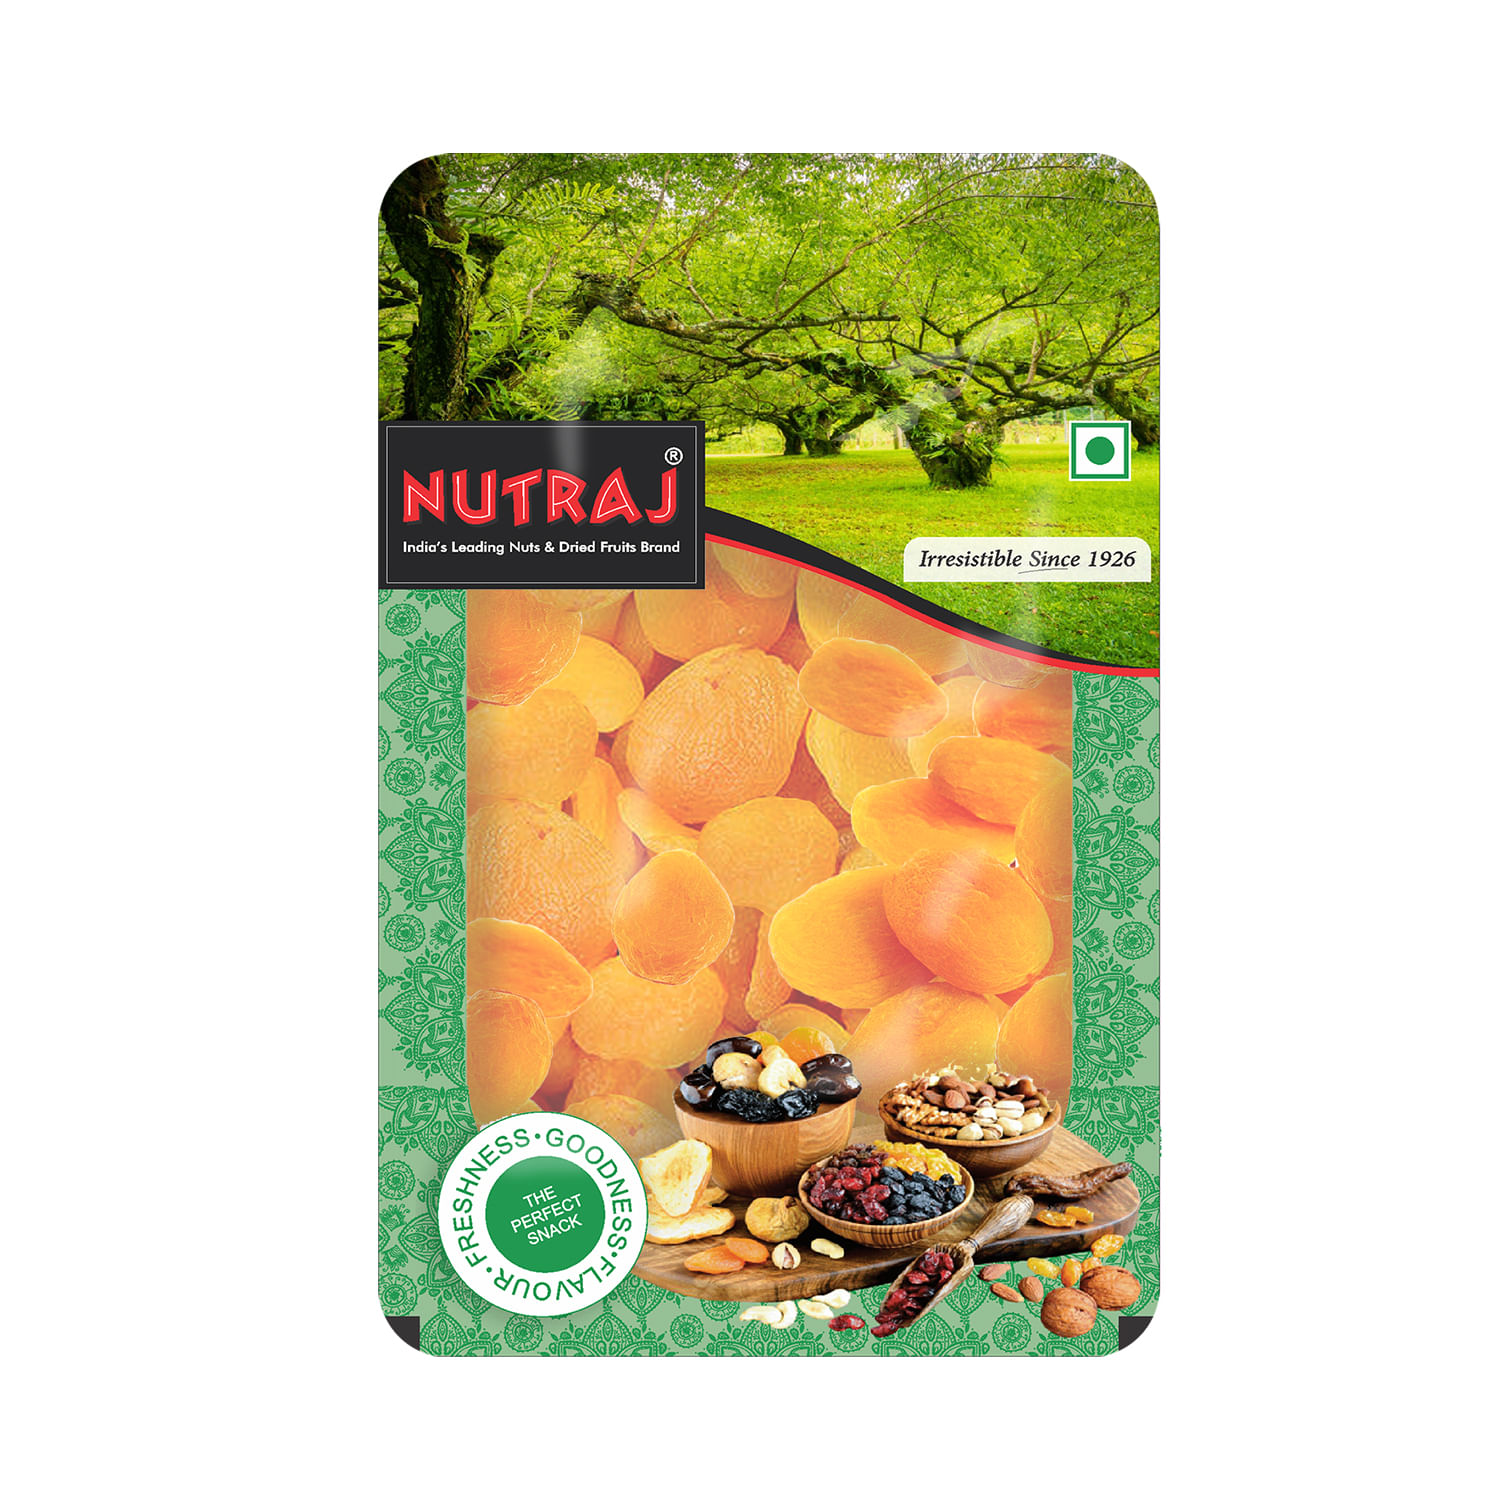 Nutraj Premium Dried Pitted Turkish Apricots 600g Tray (3 X 200g)